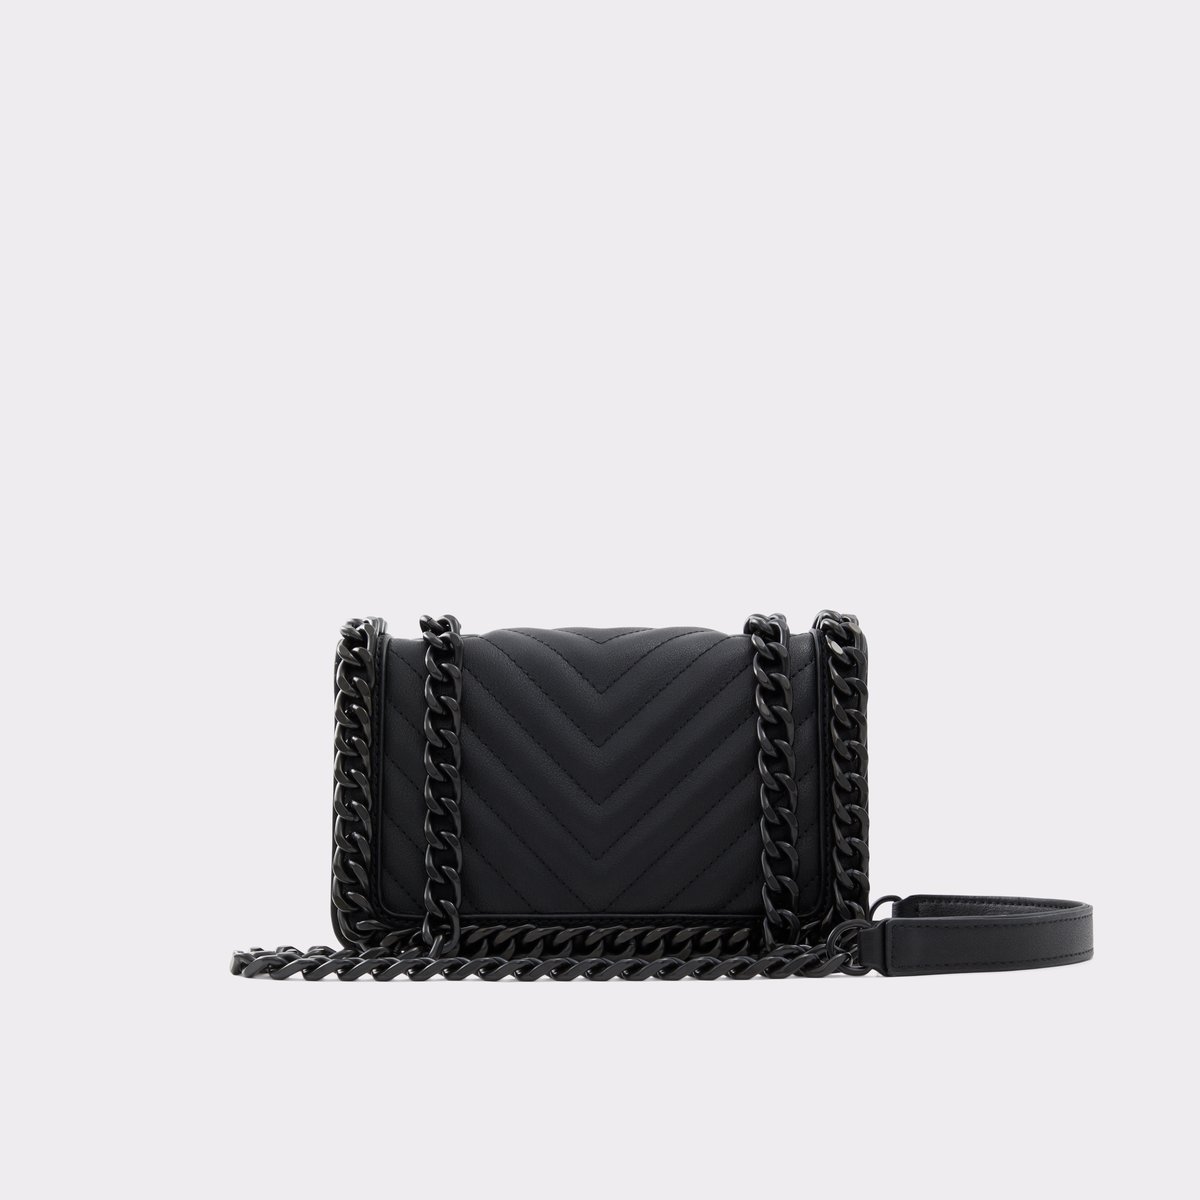 One Size ALDO Women's Minigreenwald Crossbody Bag Black/Black